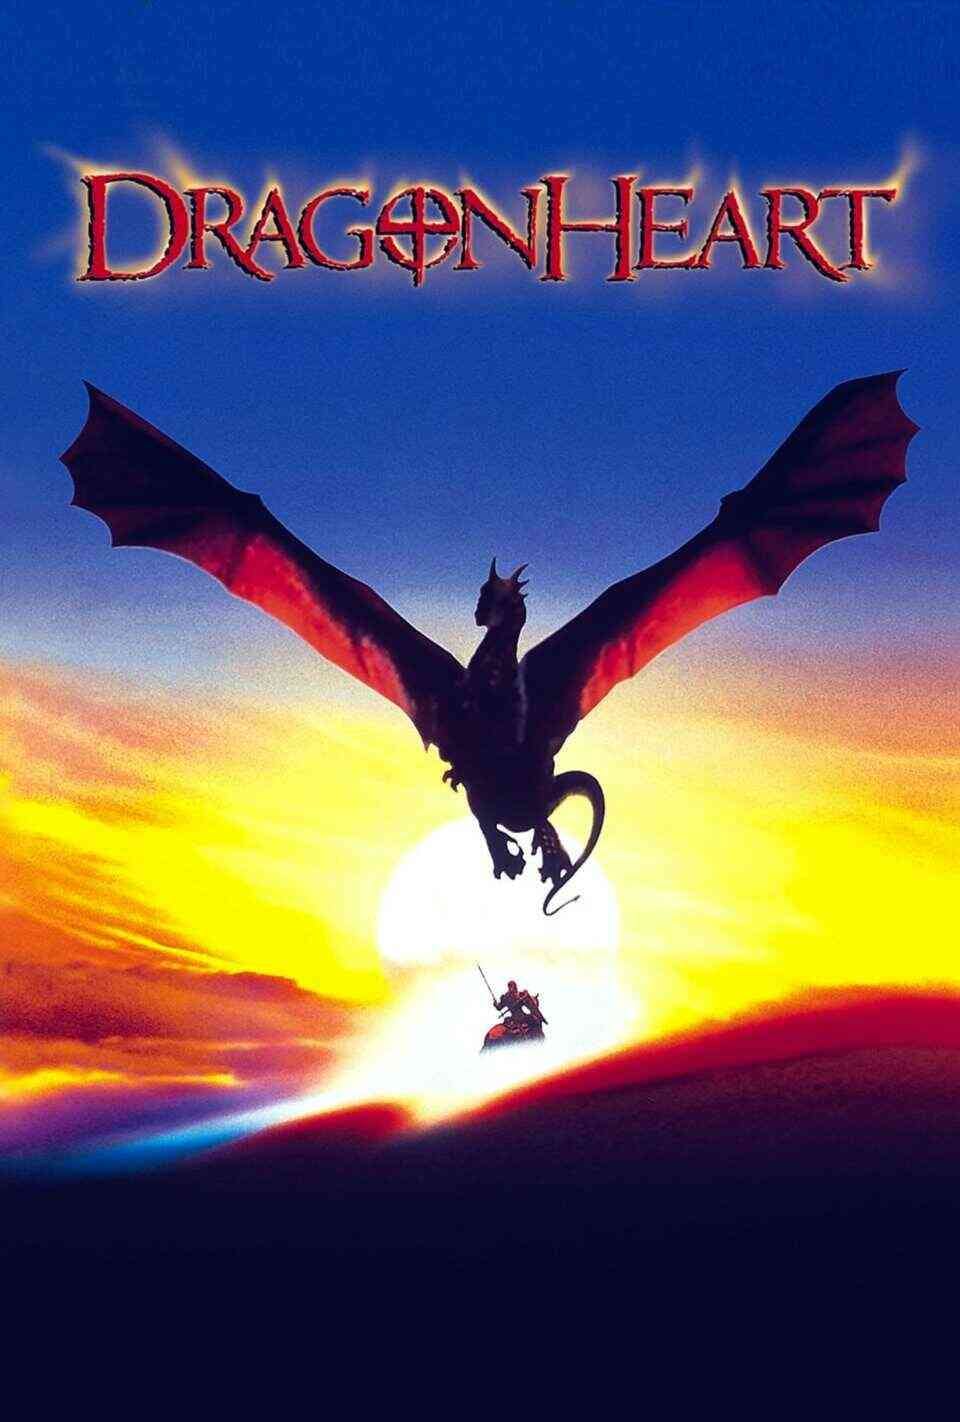 Read Dragonheart screenplay (poster)